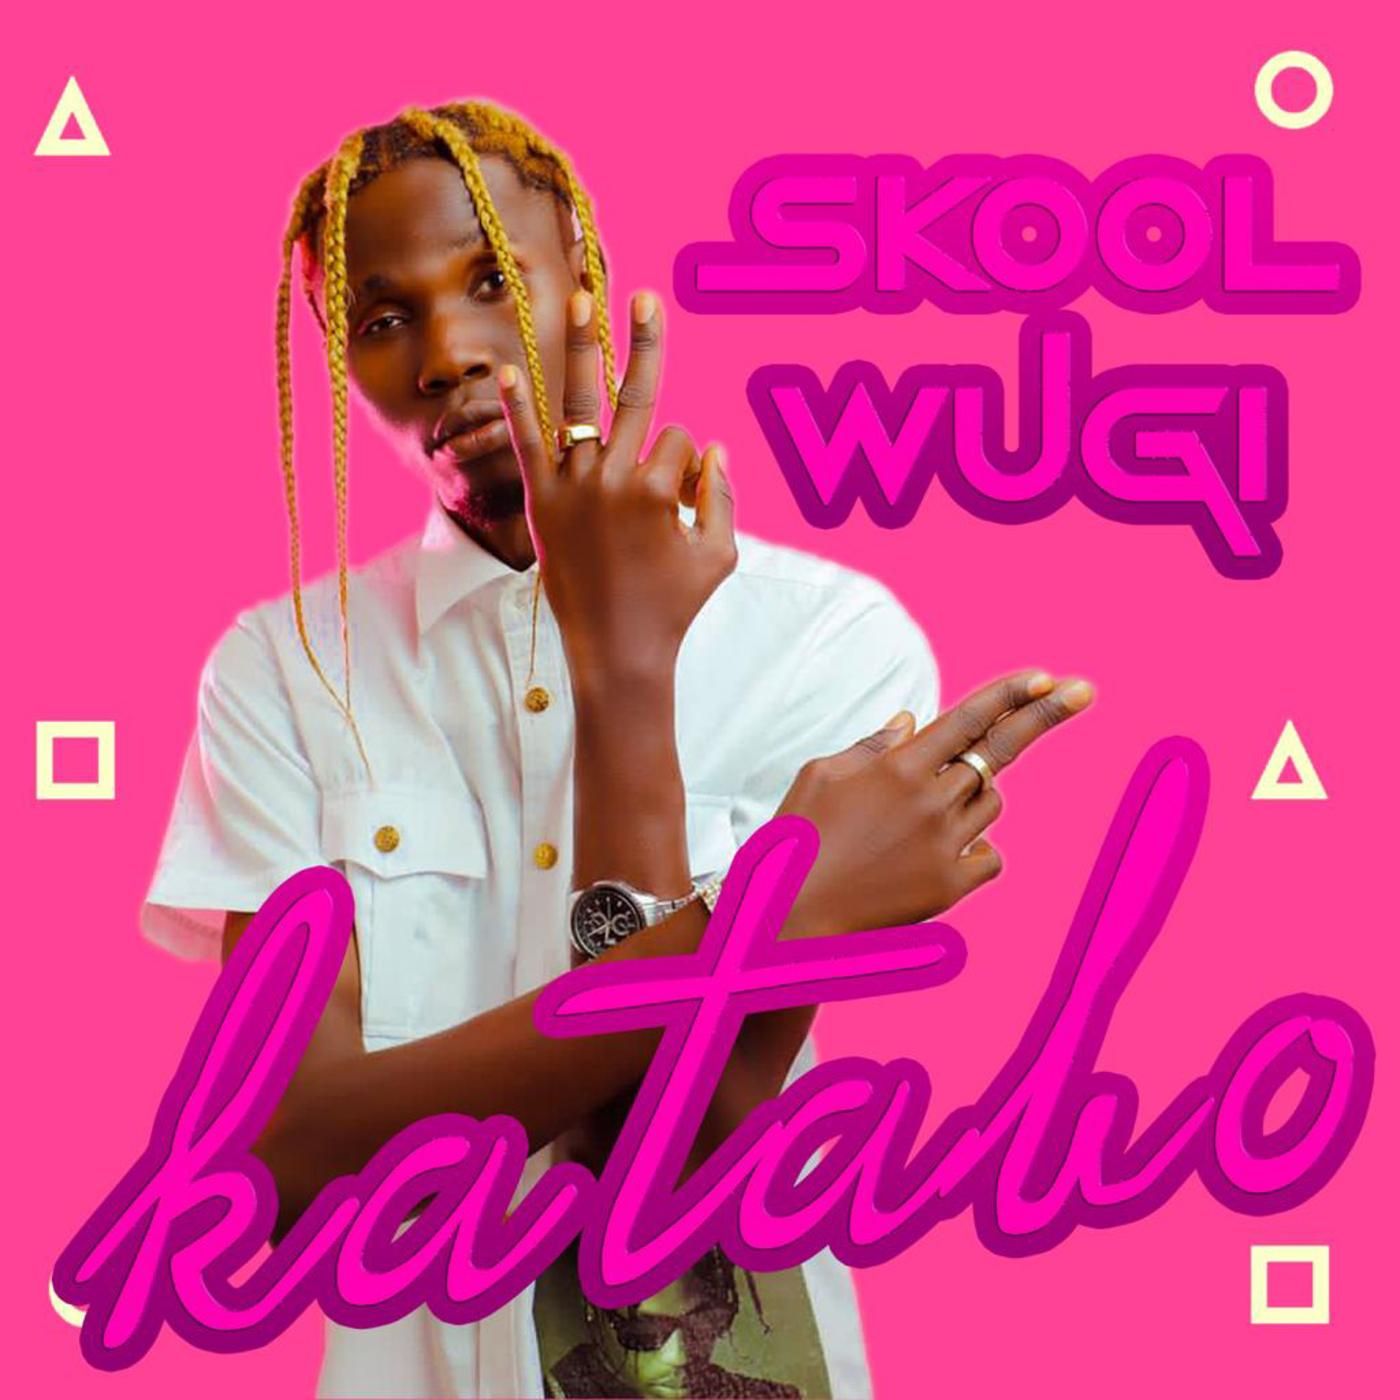 Skool Wugi - Katabo